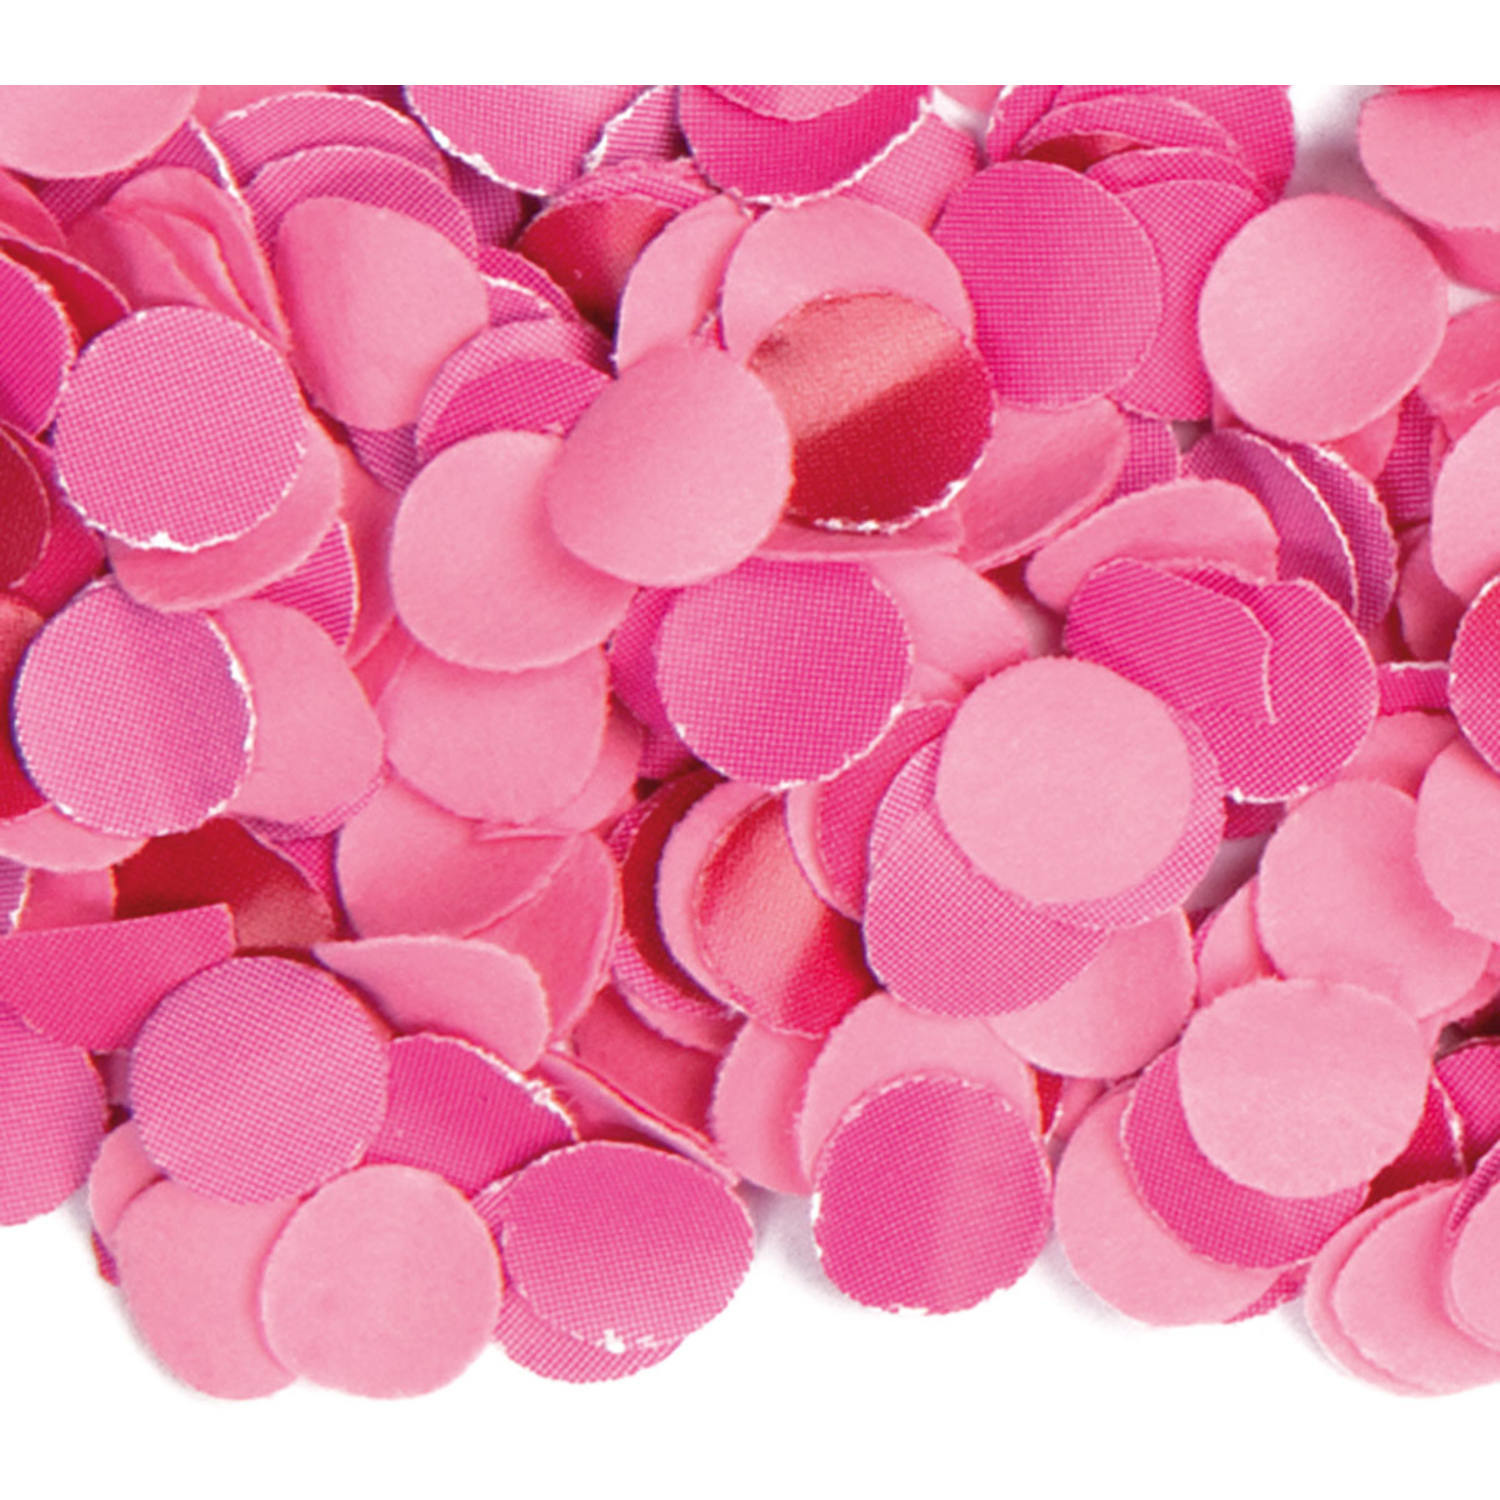 3x zakjes van 100 gram party confetti kleur roze